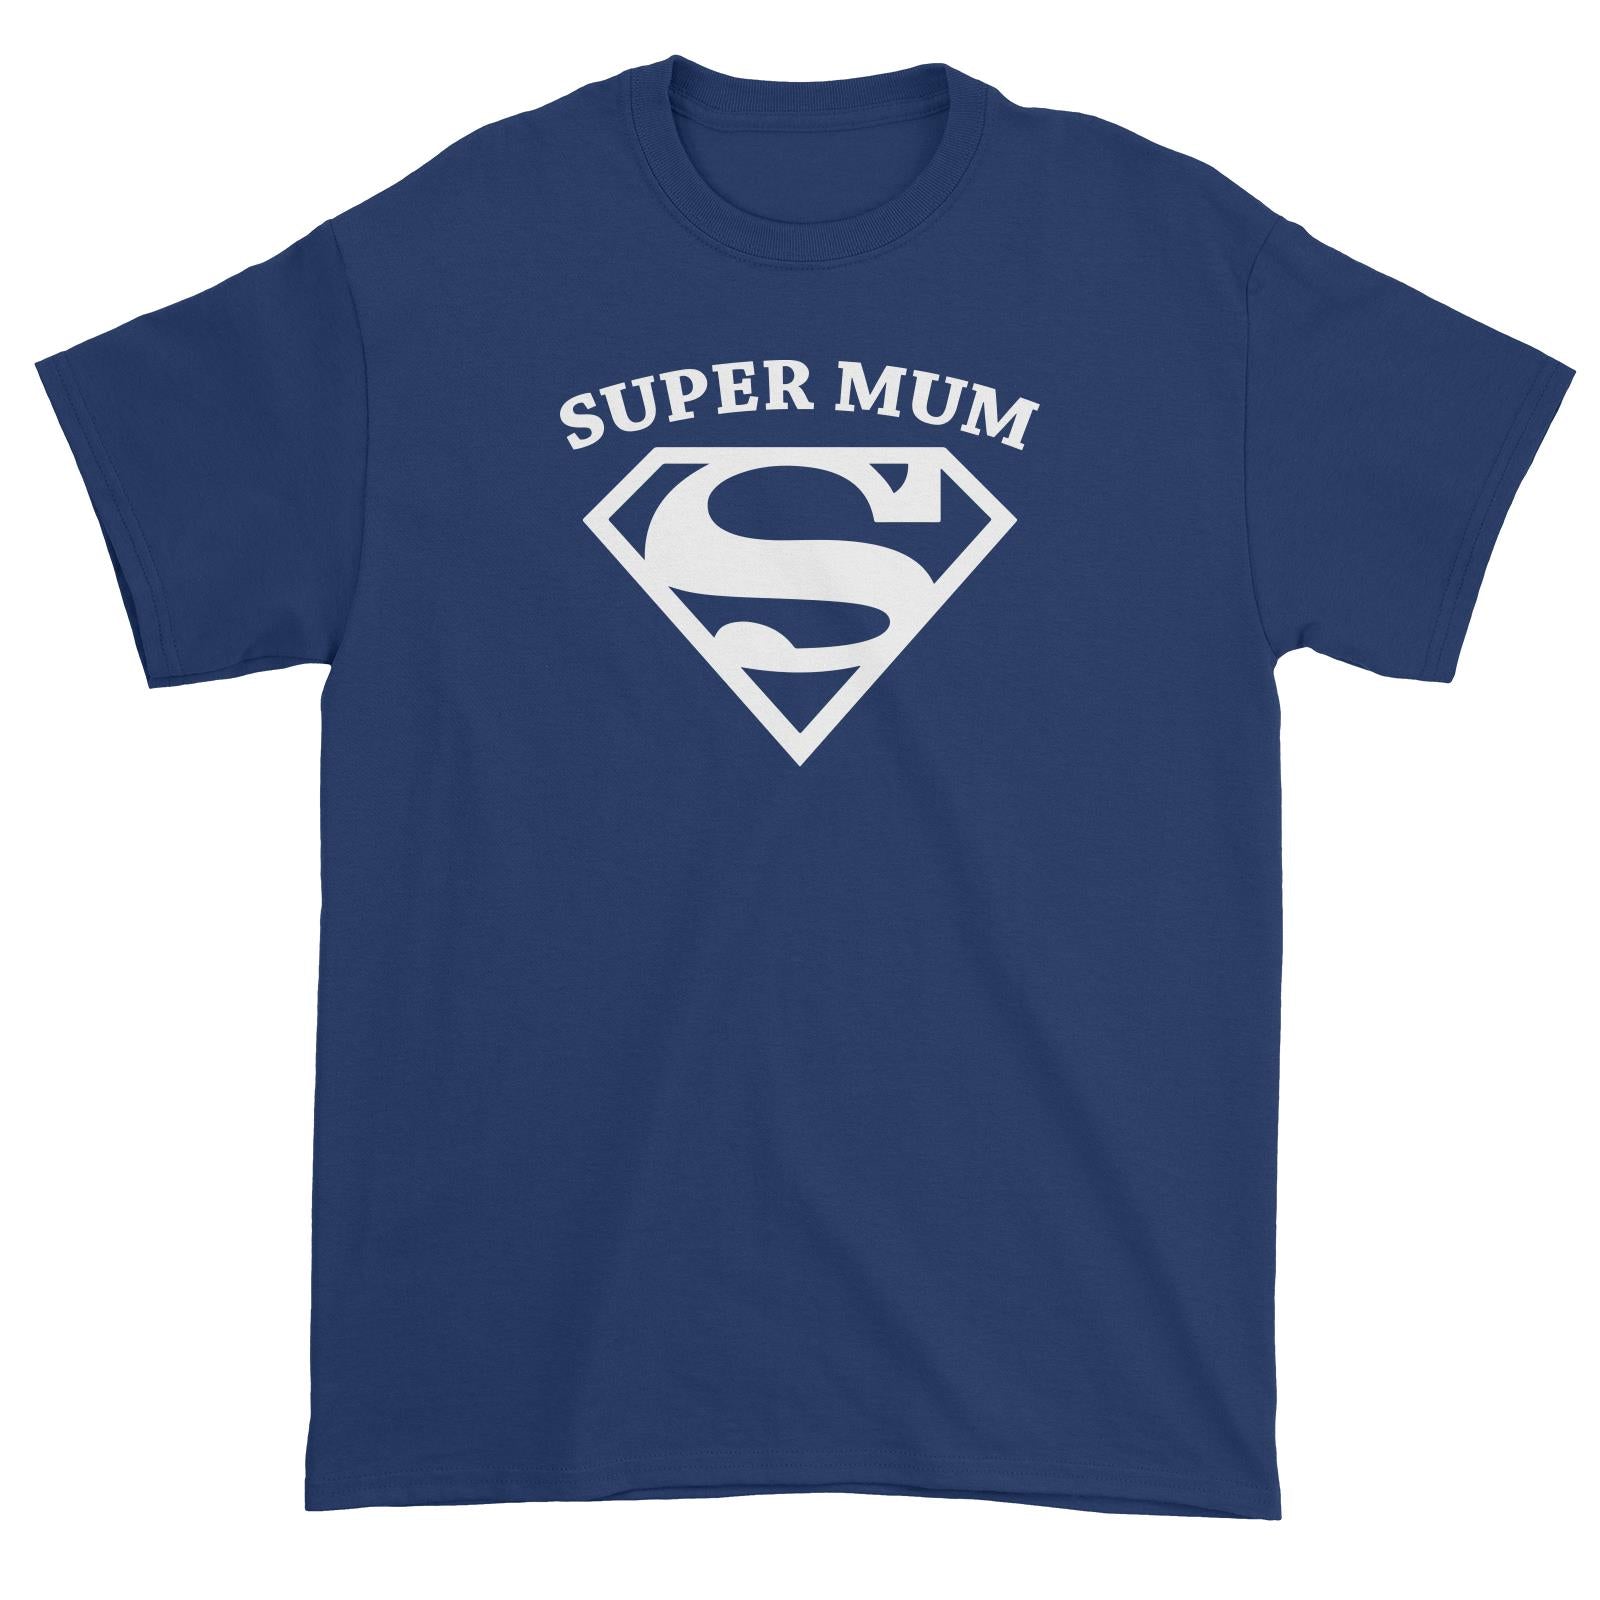 Super Mum Unisex T-Shirt Superhero Matching Family Marvel